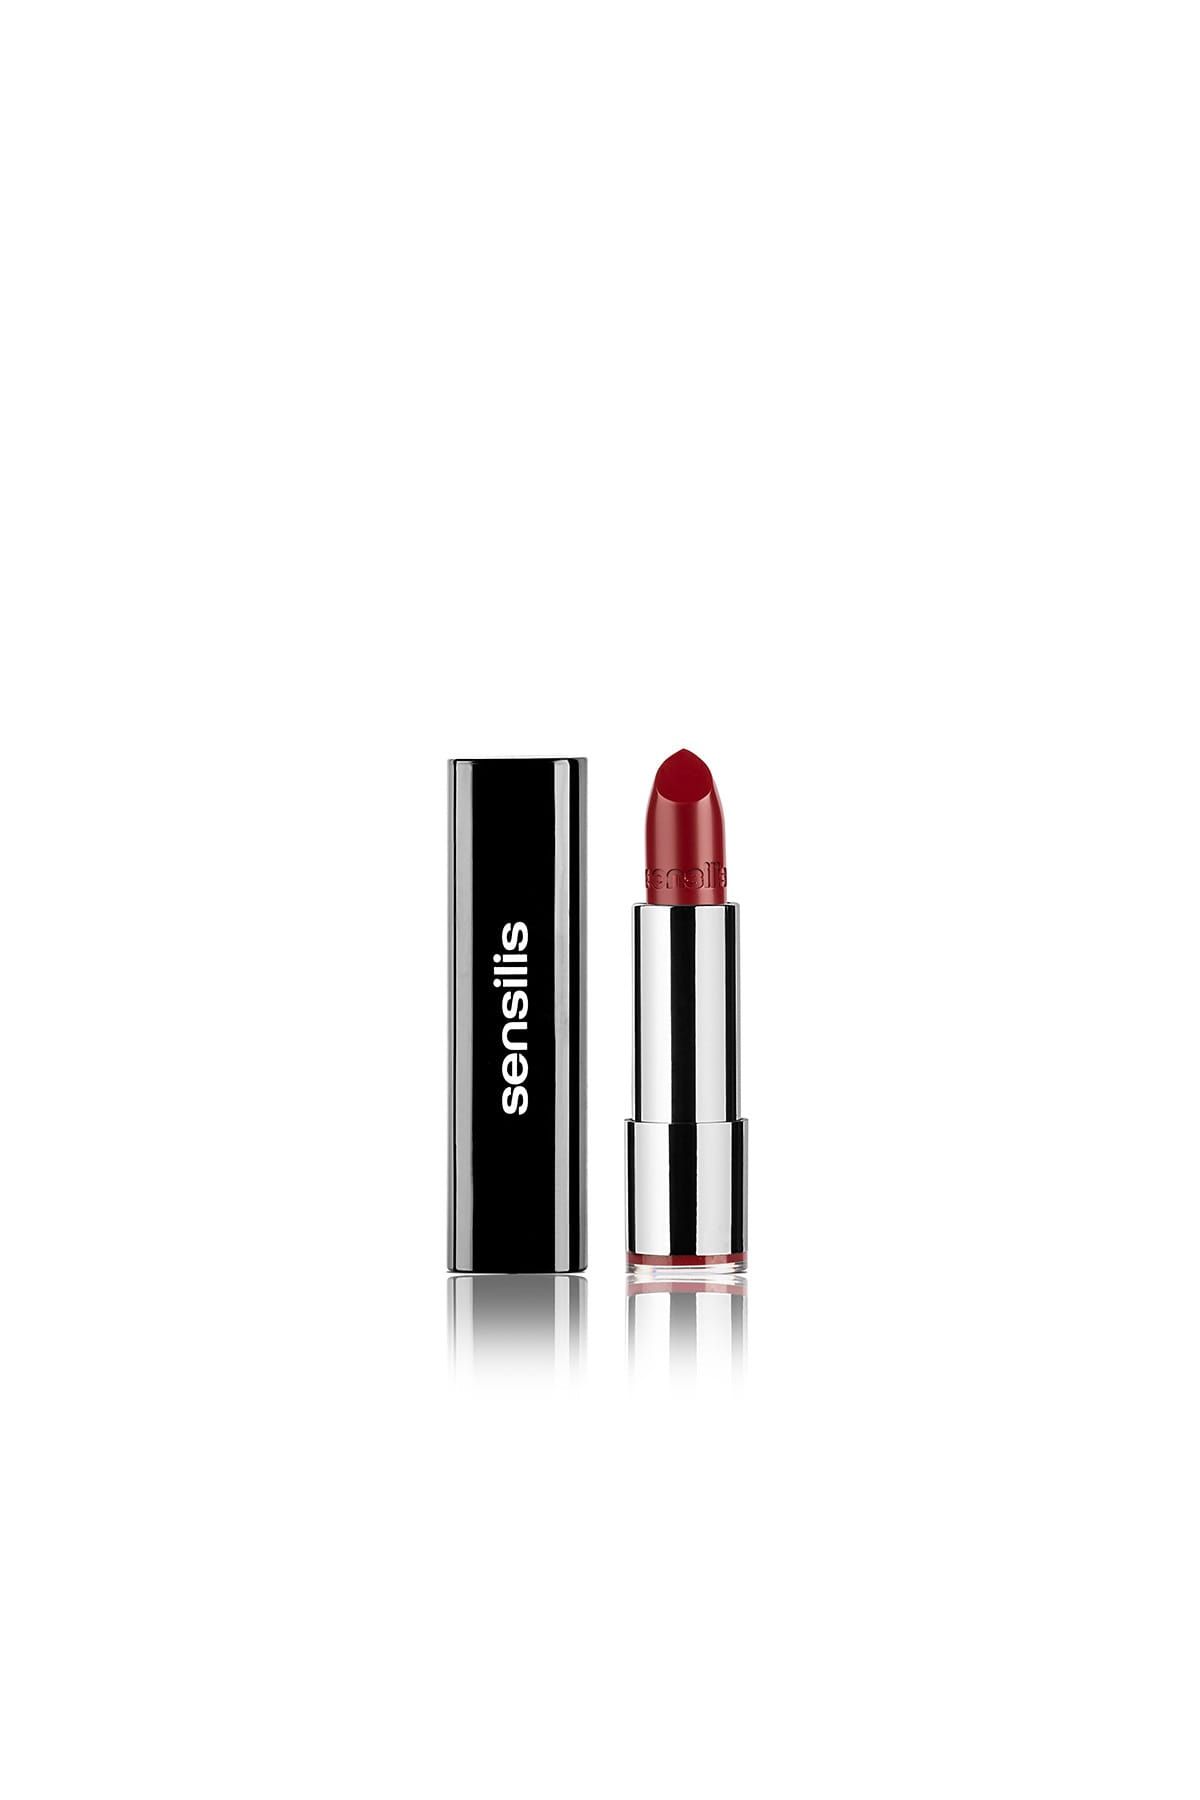 Sensilis Ruj Velvet Satin Comfort Lipstick 214 Pourpre 8428749522508 4203